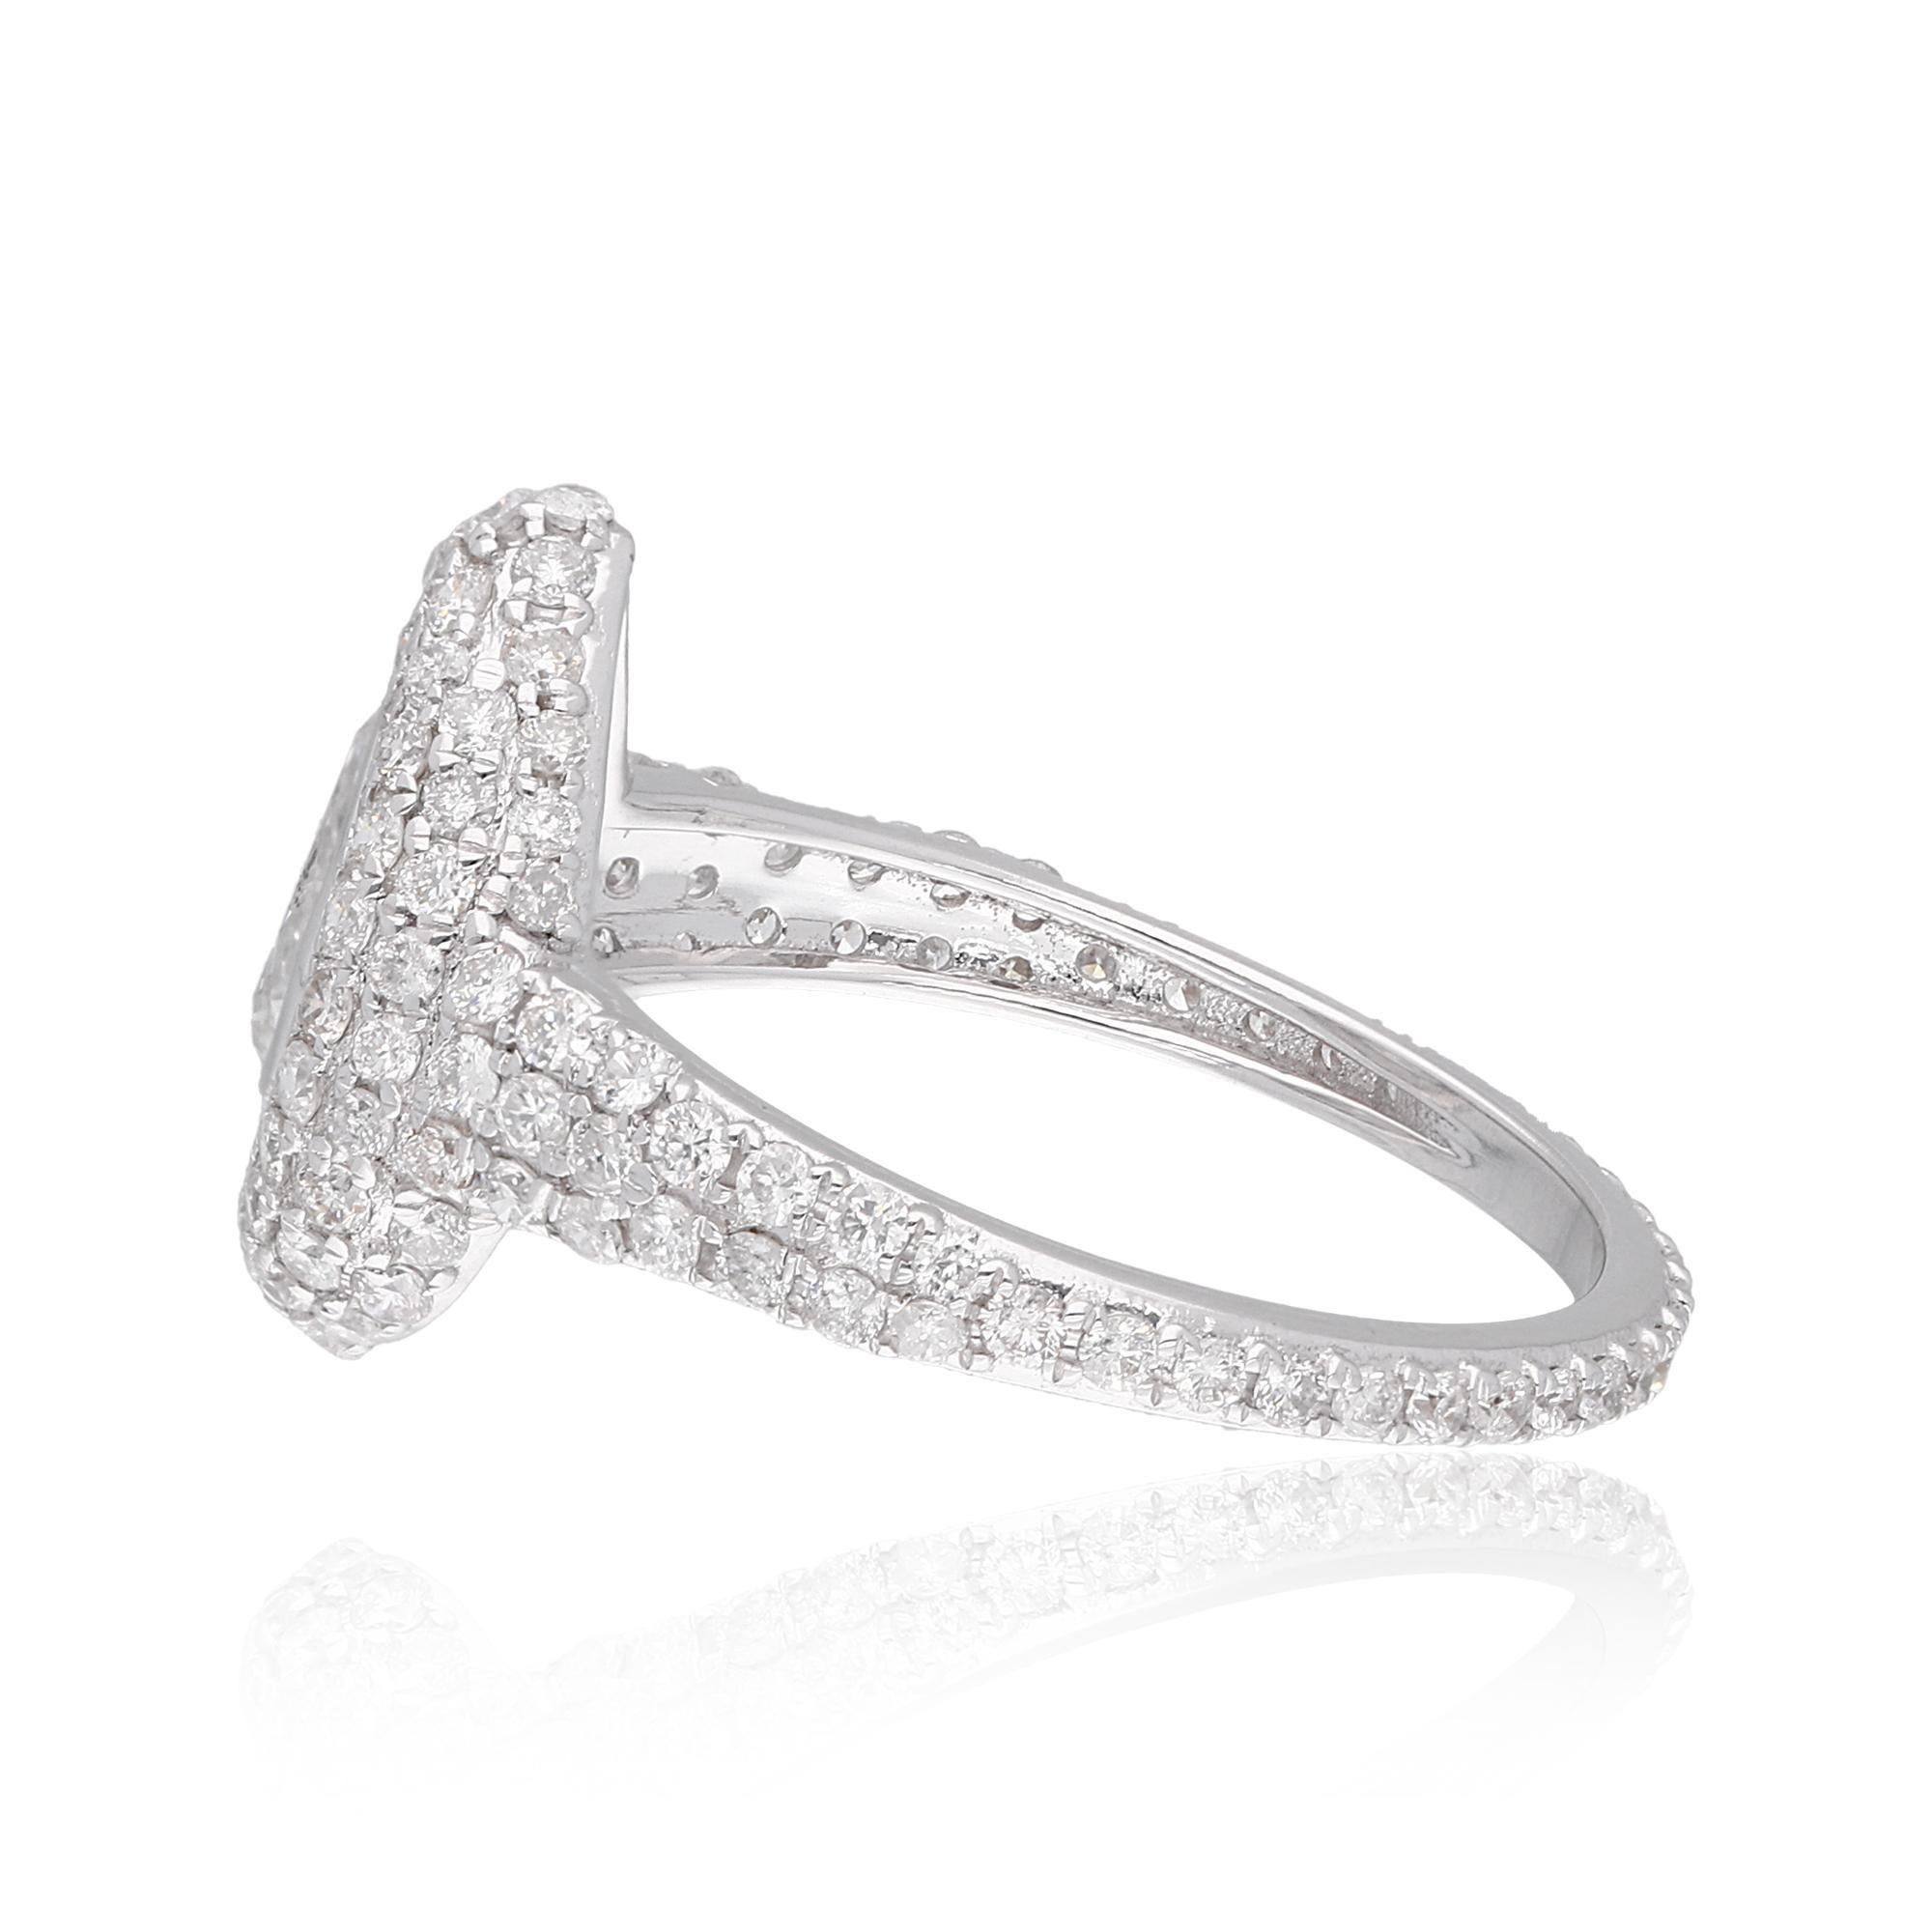 1.54 Carat Pear Diamond Studded Ring 14 Karat White Gold Handmade Fine Jewelry For Sale 1